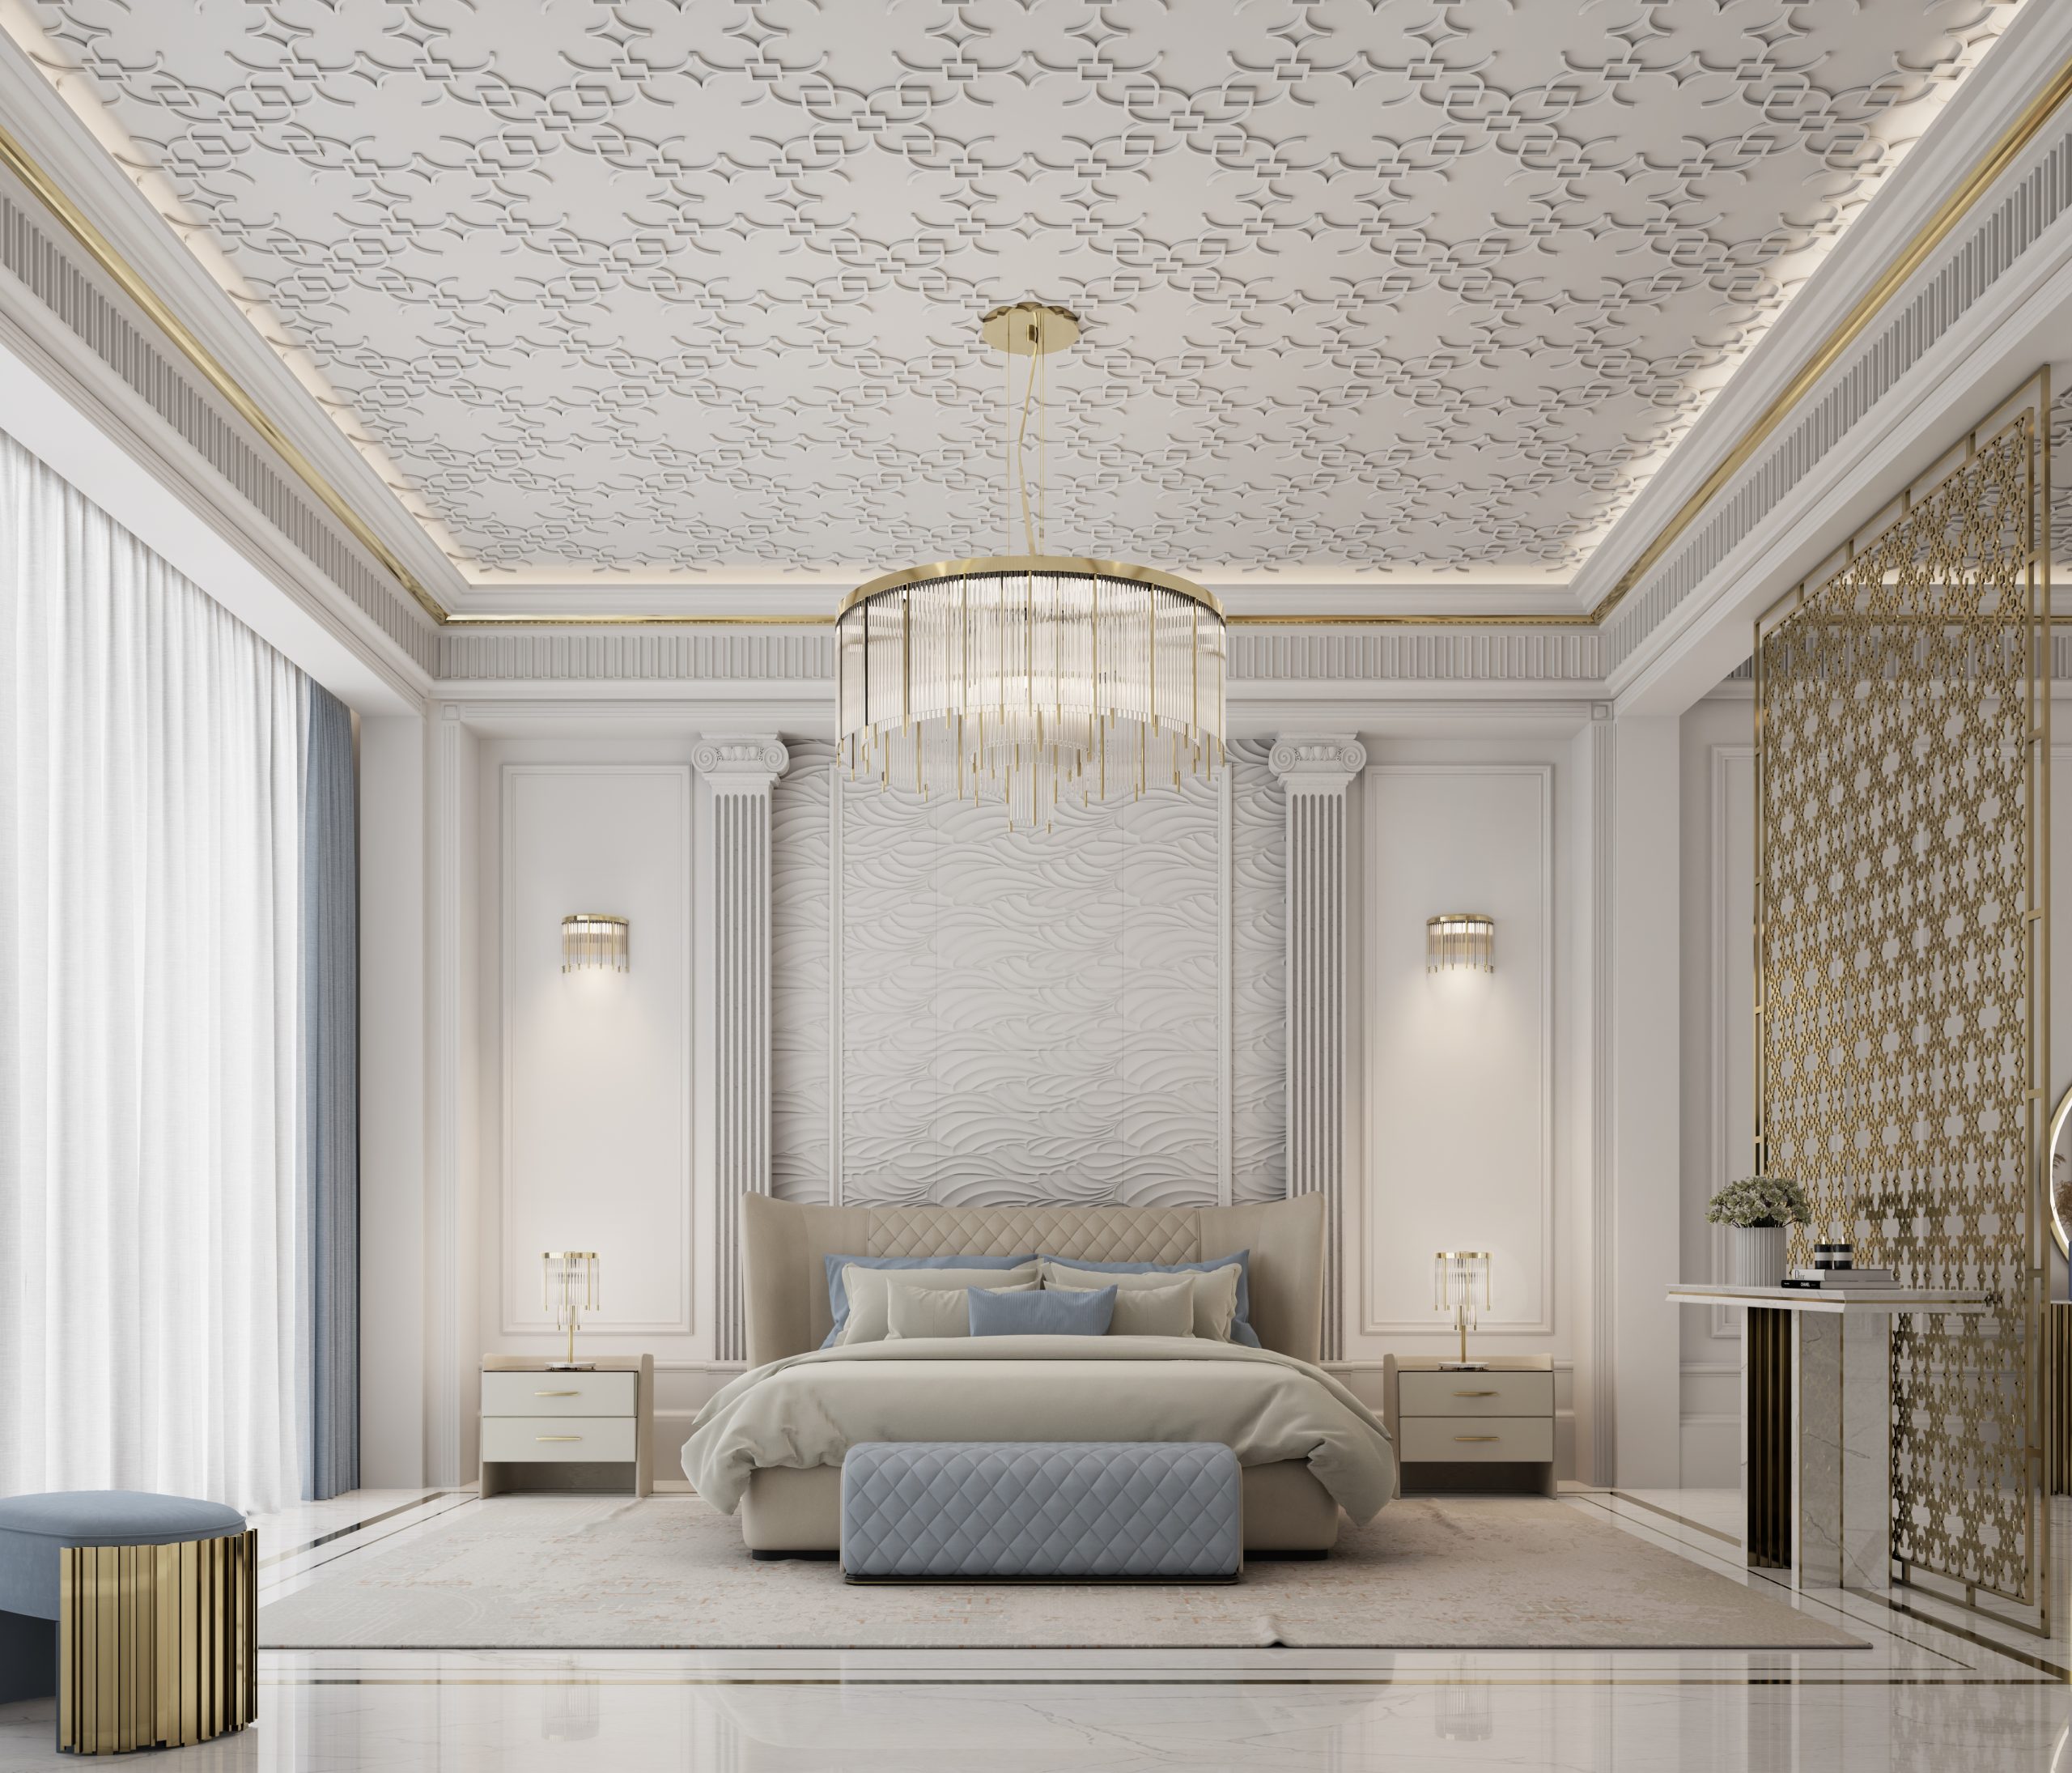 Meraki Palace In Qatar: Feel The Modern Design With An Arabian Touch